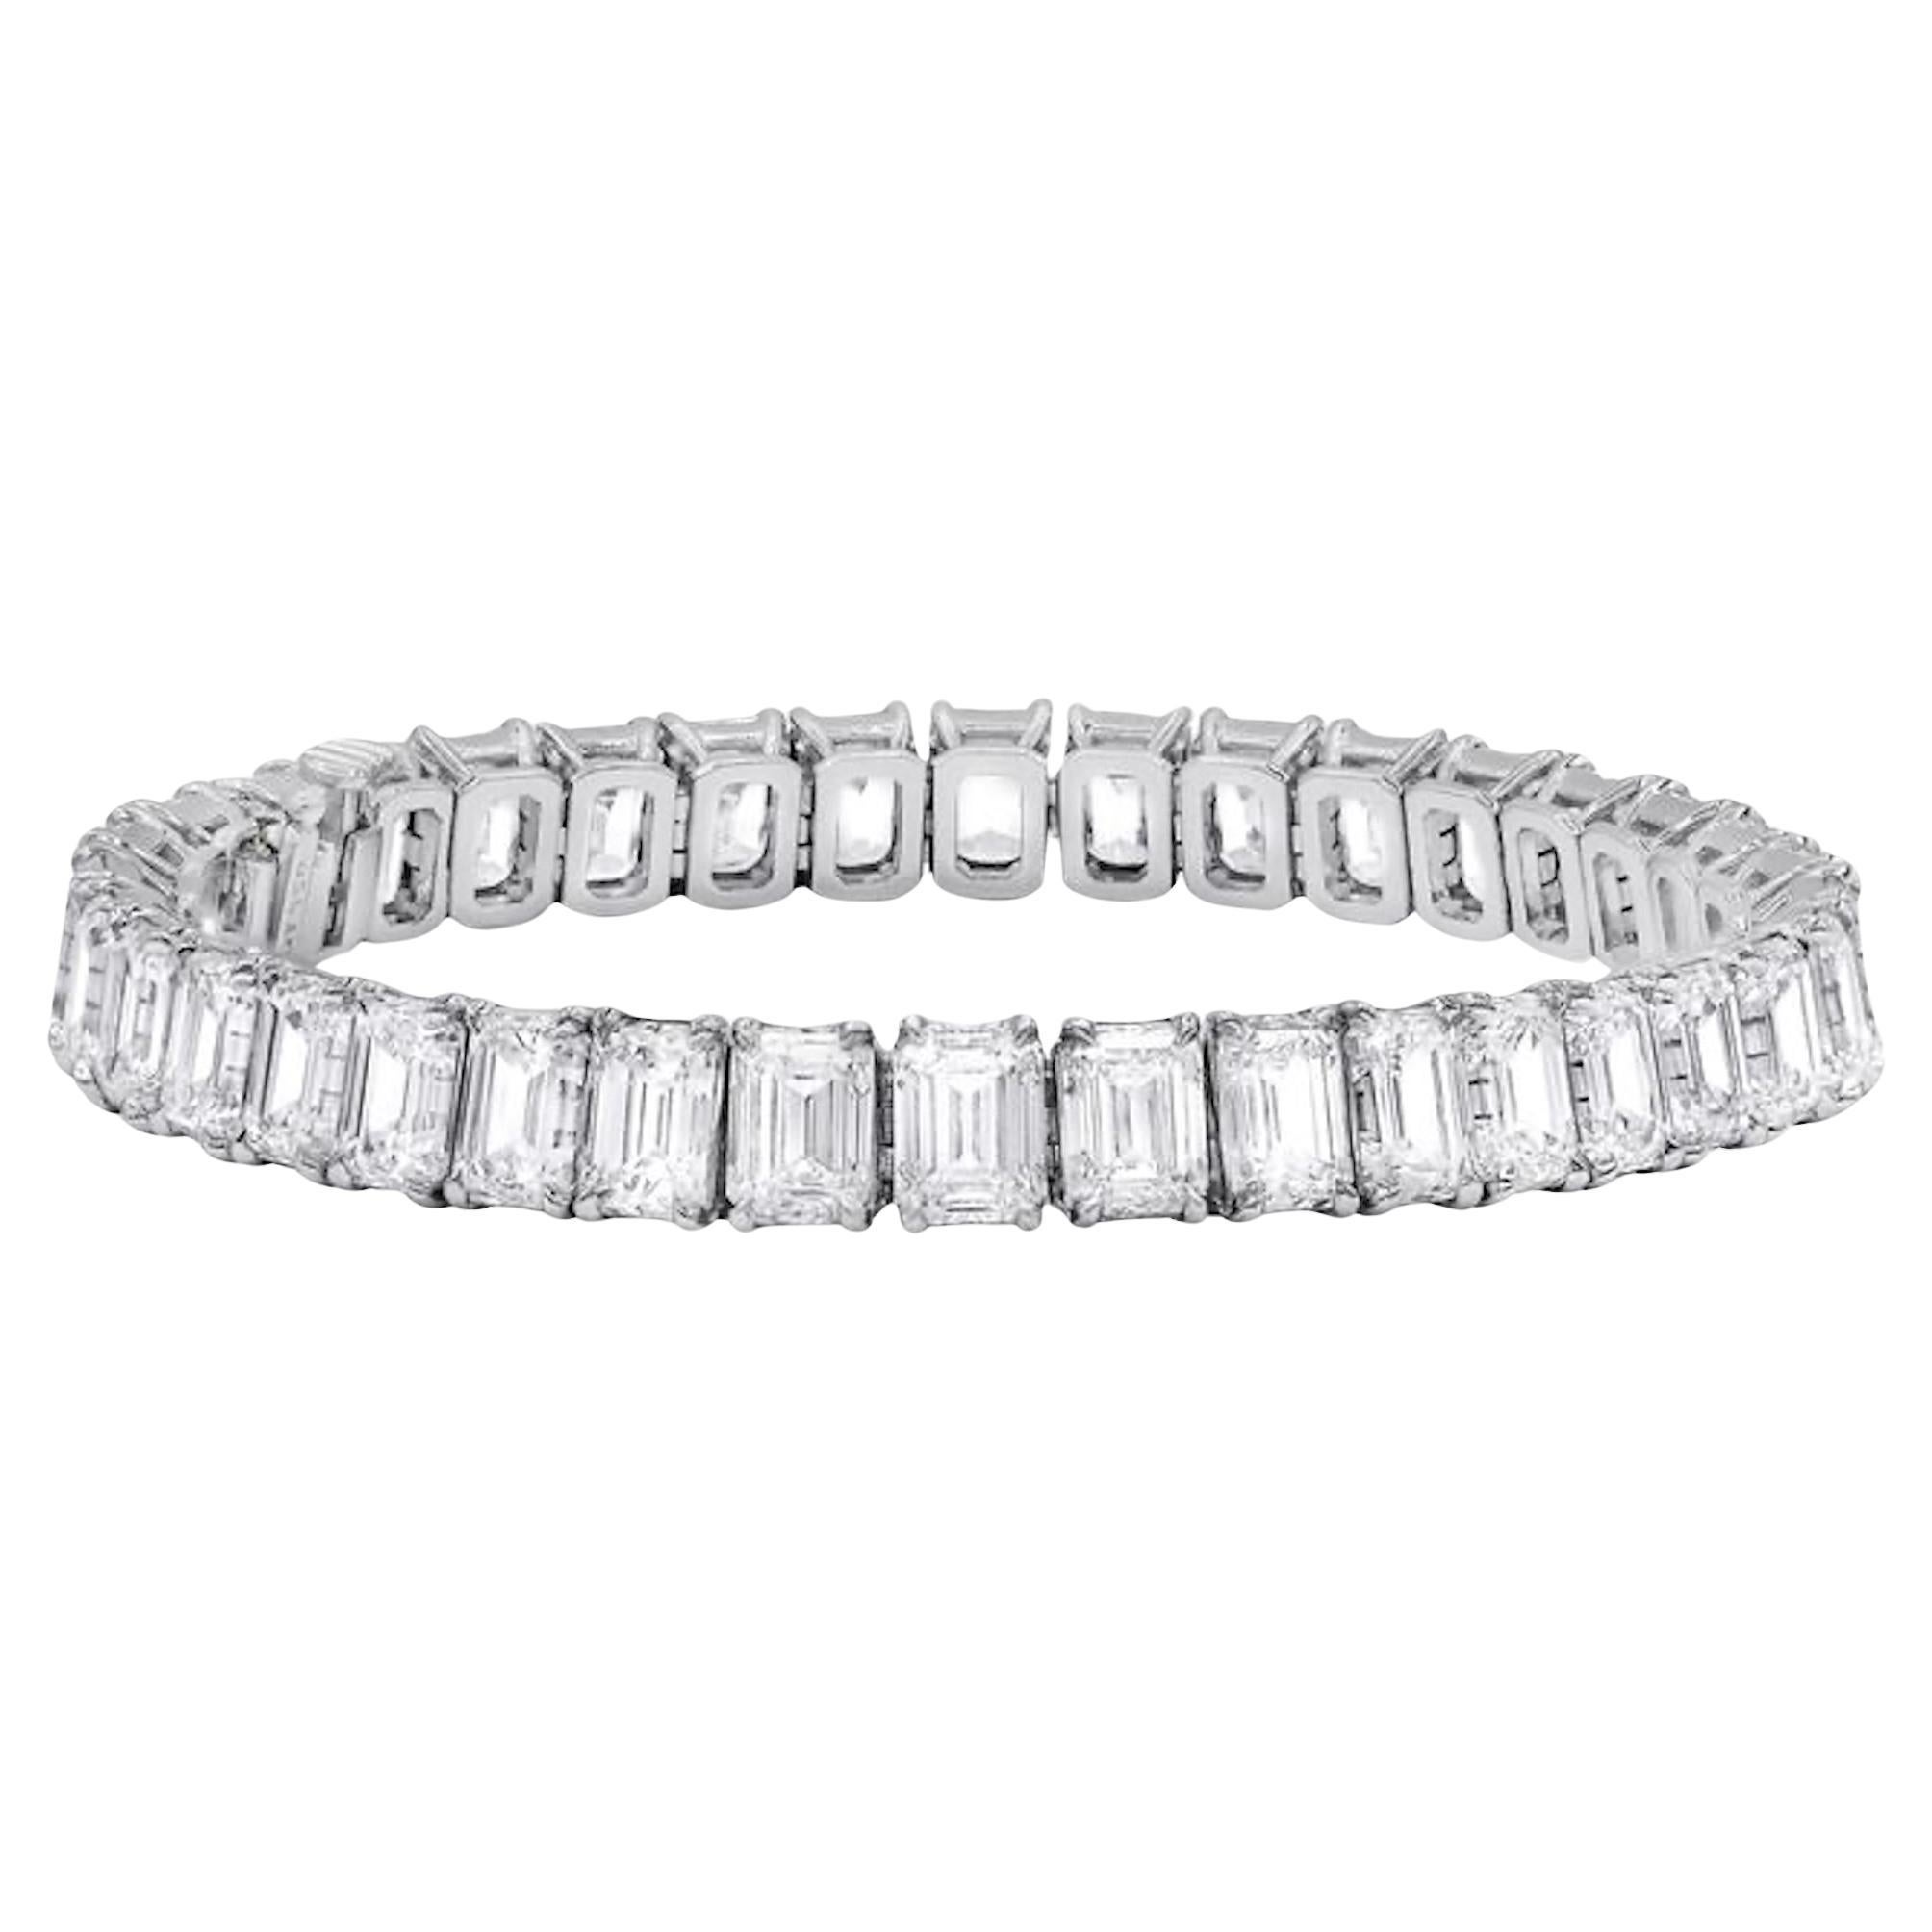 Diana M. 26.97 Carat 4 Prong Emerald Cut Diamond Bracelet 